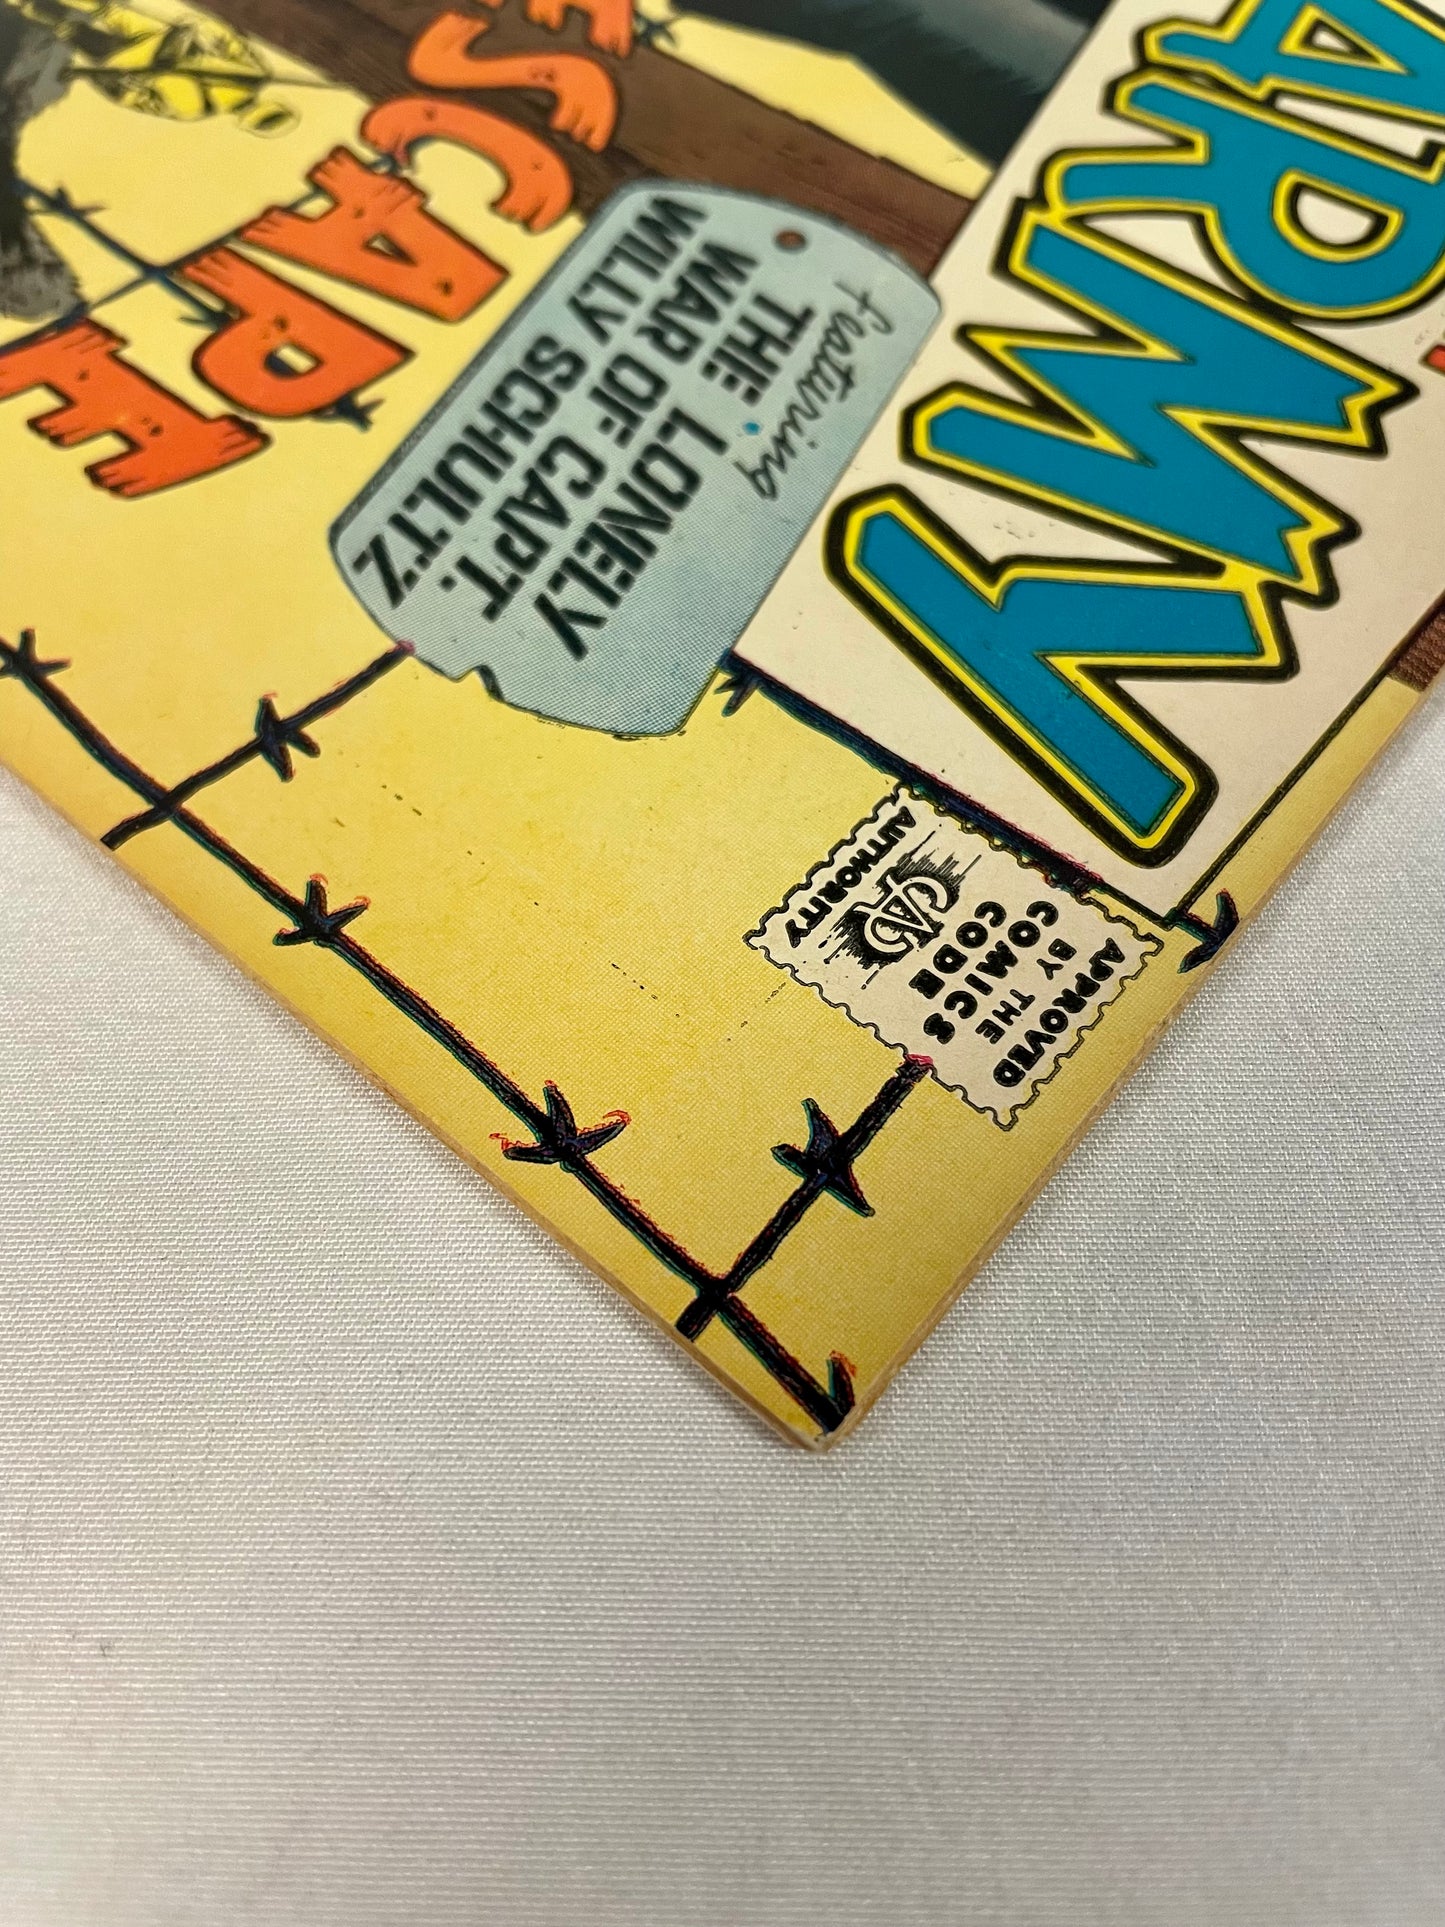 Charlton Comics Fightin' Army No. 86